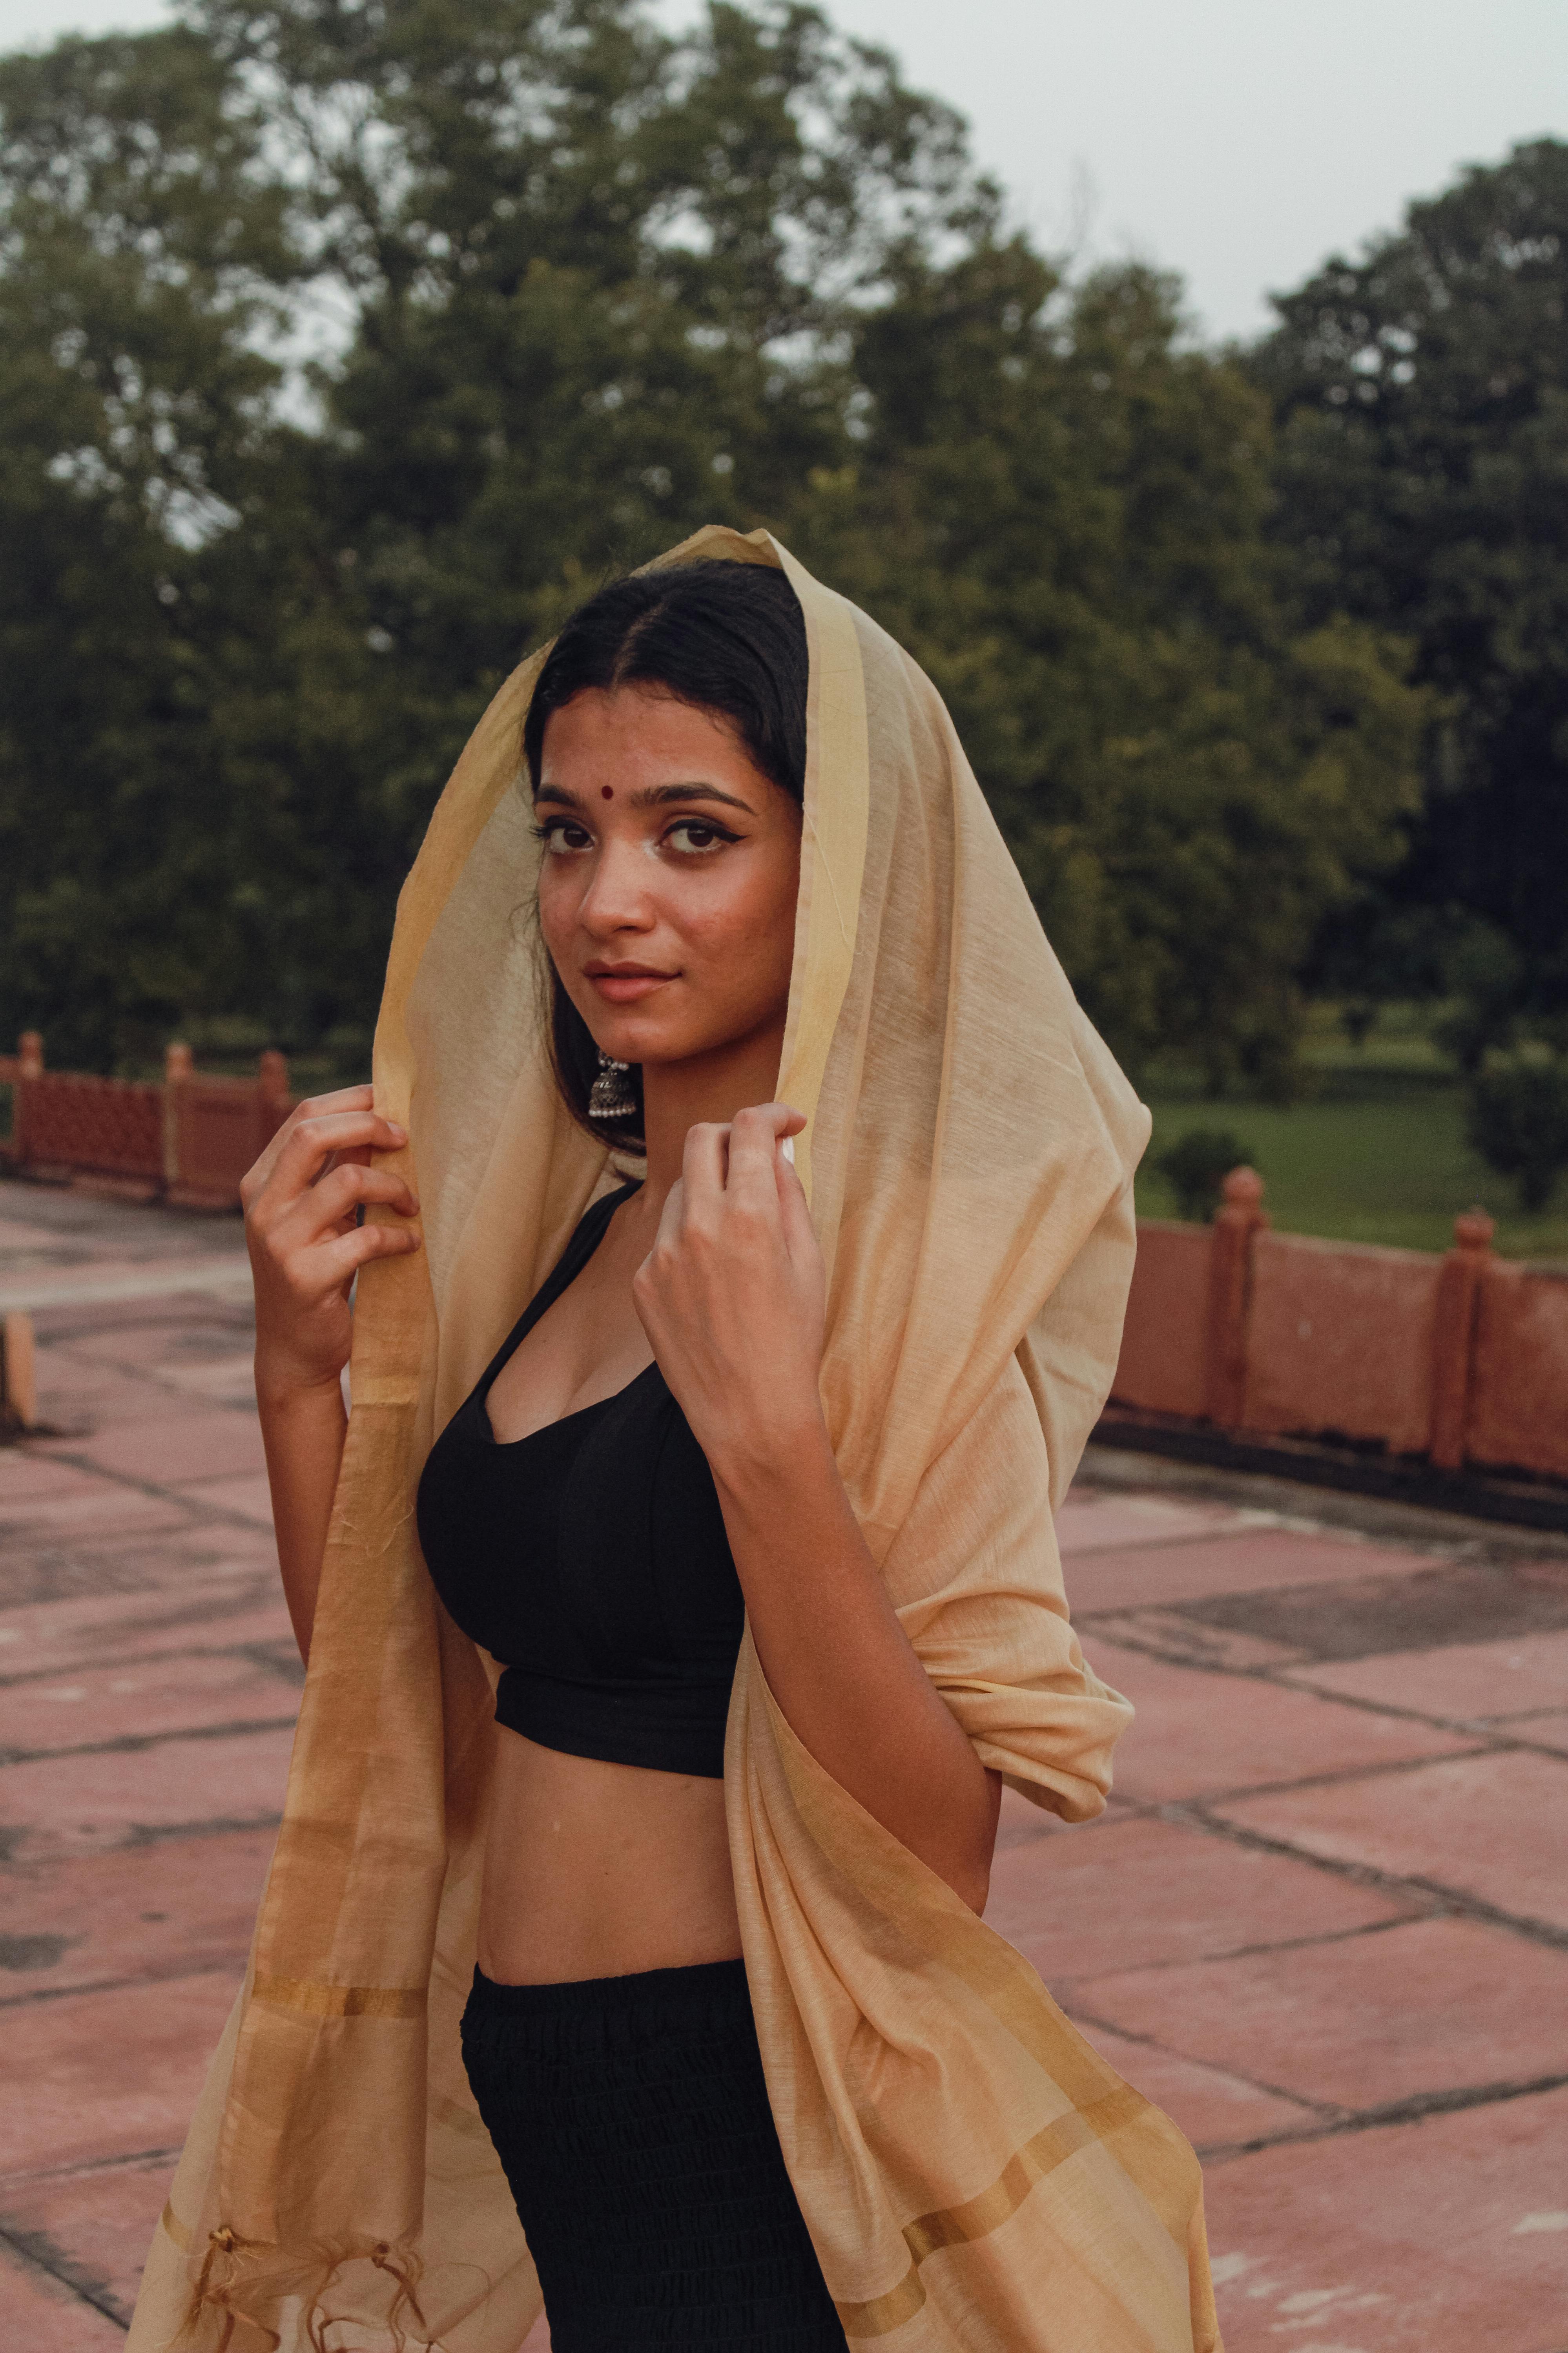 Woman Wearing Saree Looking Away · Free Stock Photo